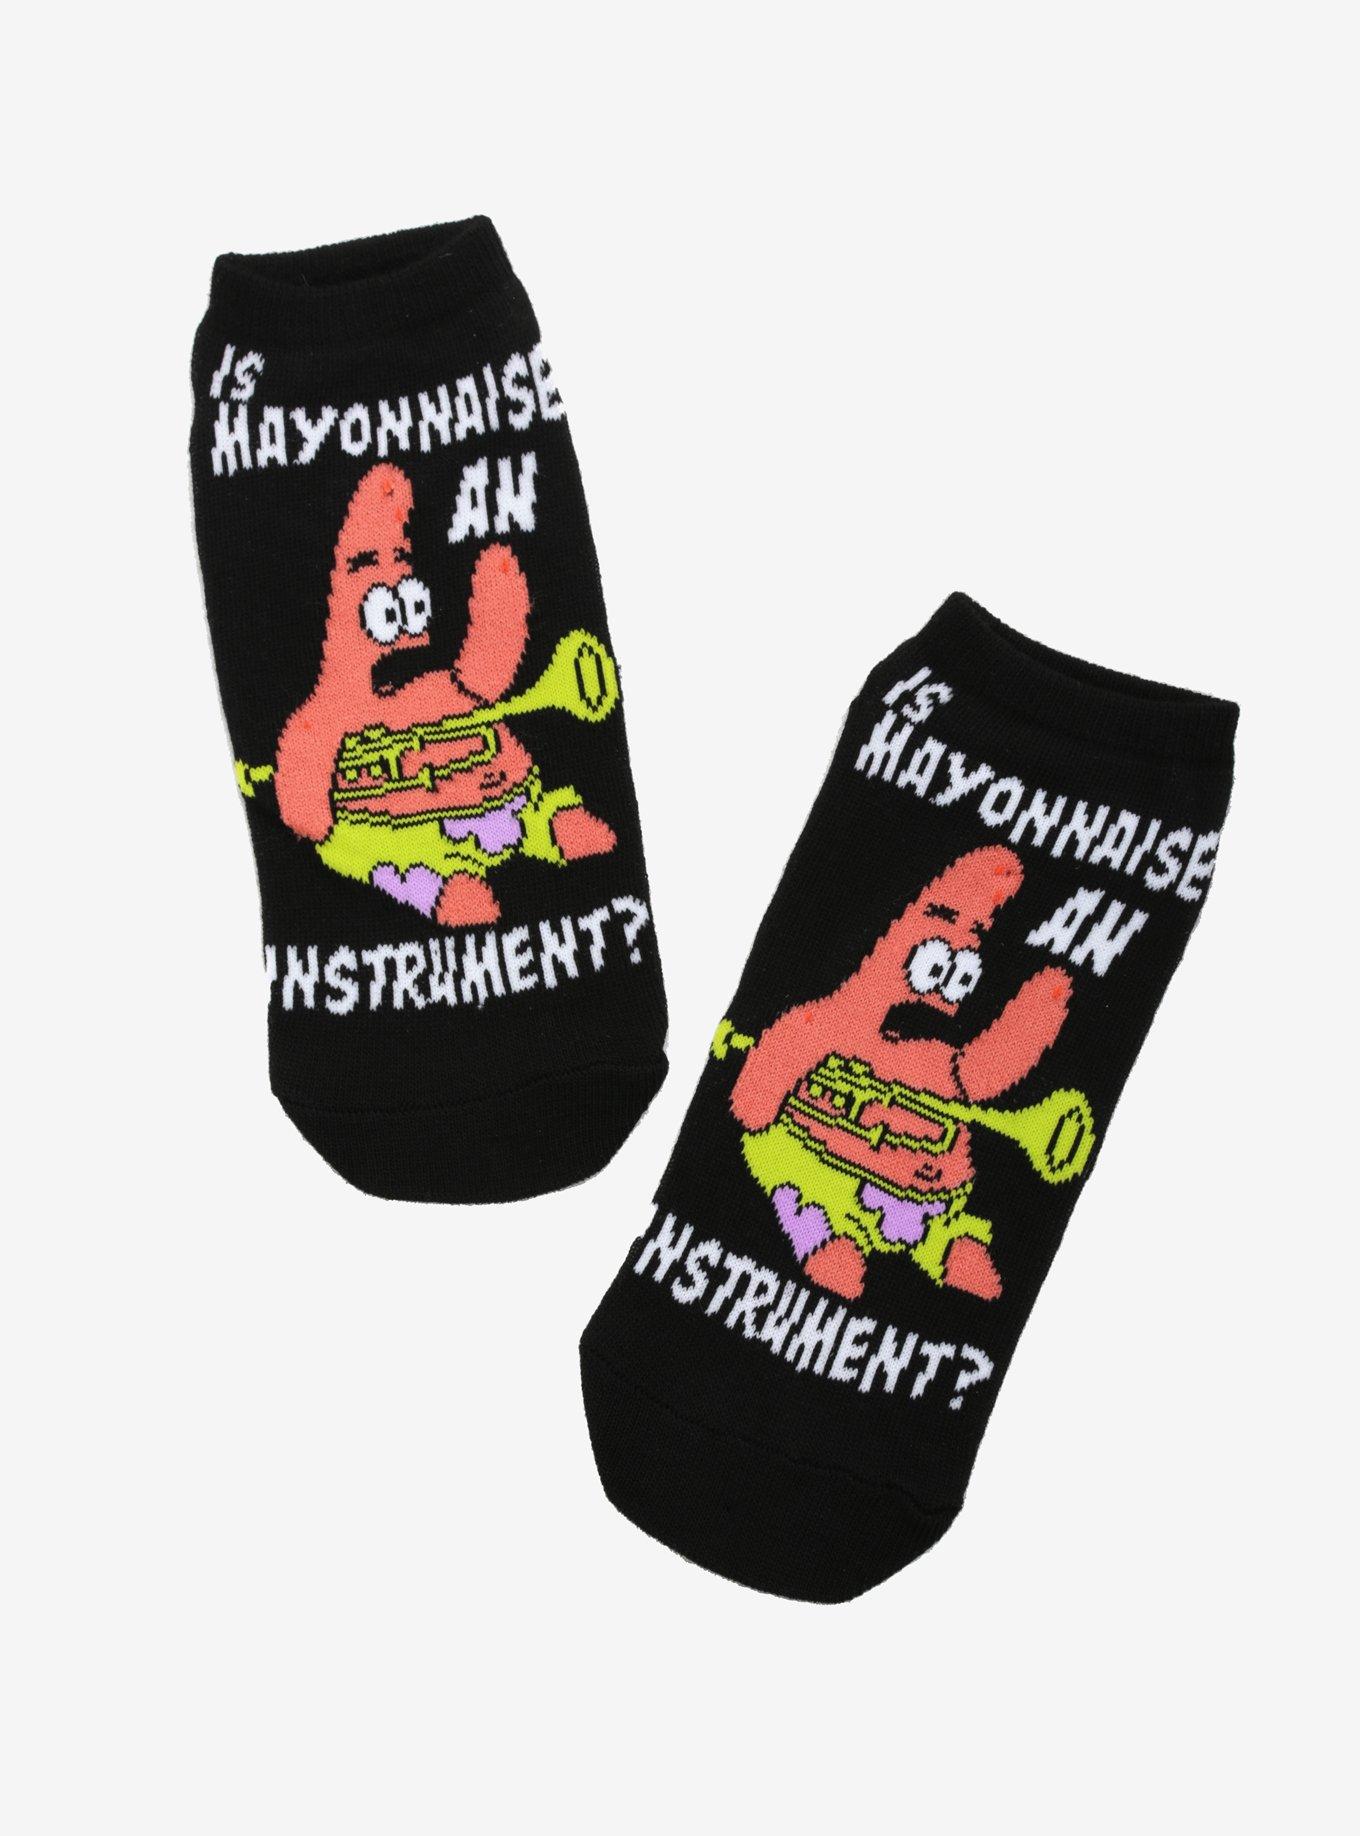 Spongebob Squarepants Graphic - Meme Socks for Sale by Mariascientist